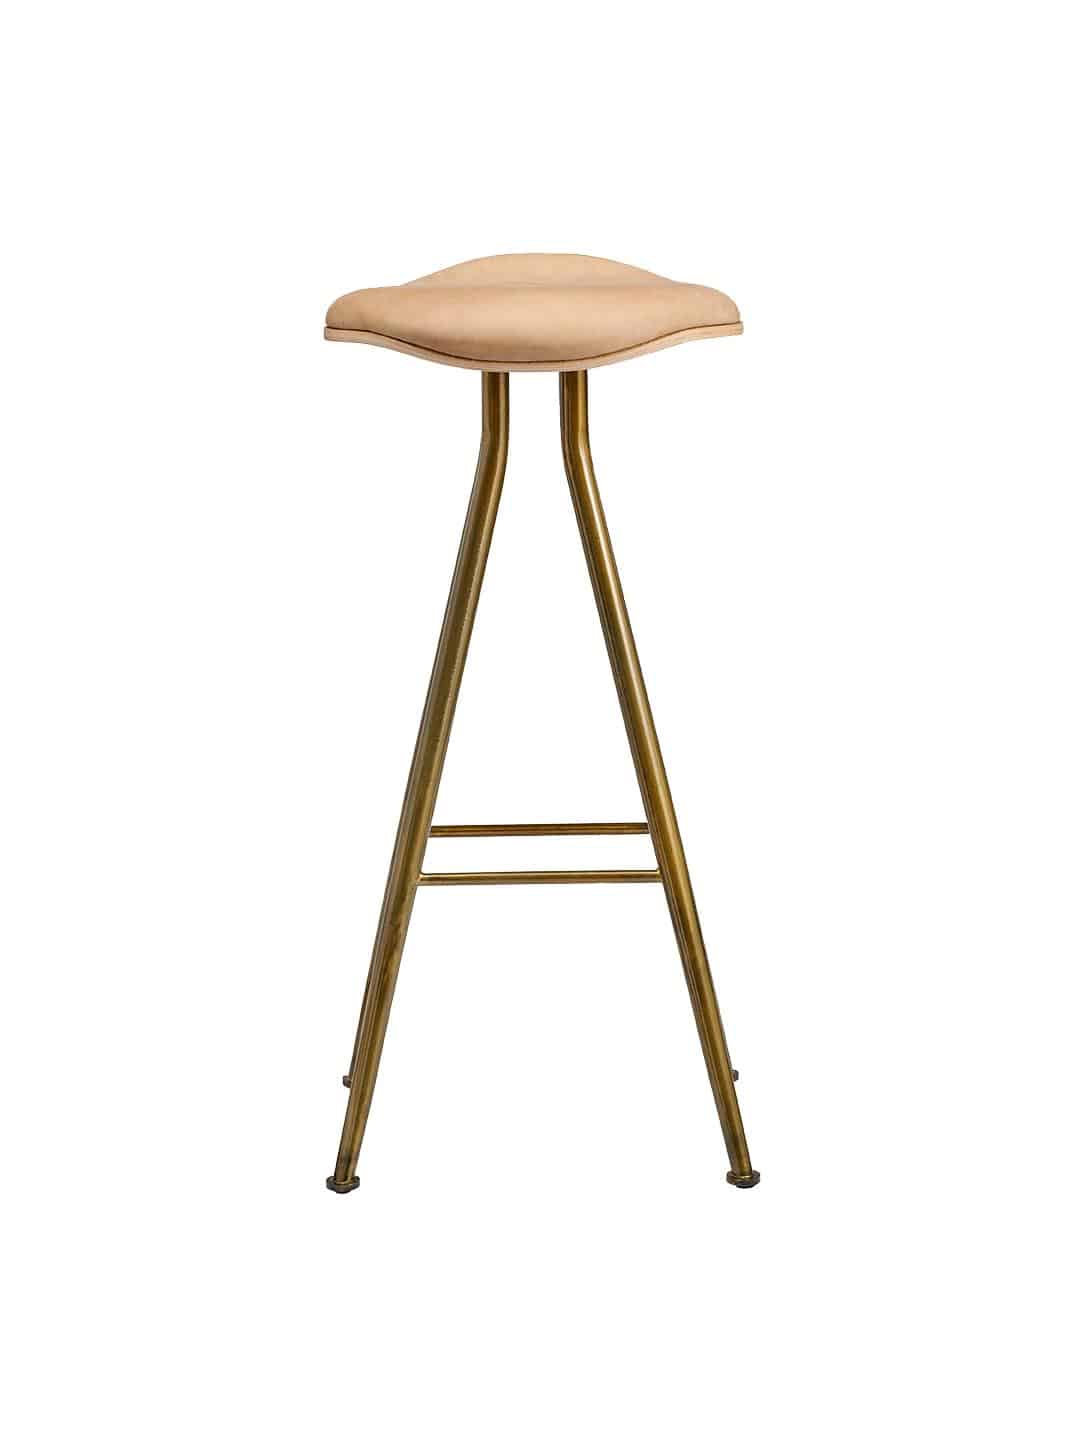 Барный стул NORR11 Barfly - кожа латунь/кожа желто-коричневого цвета премиум класса